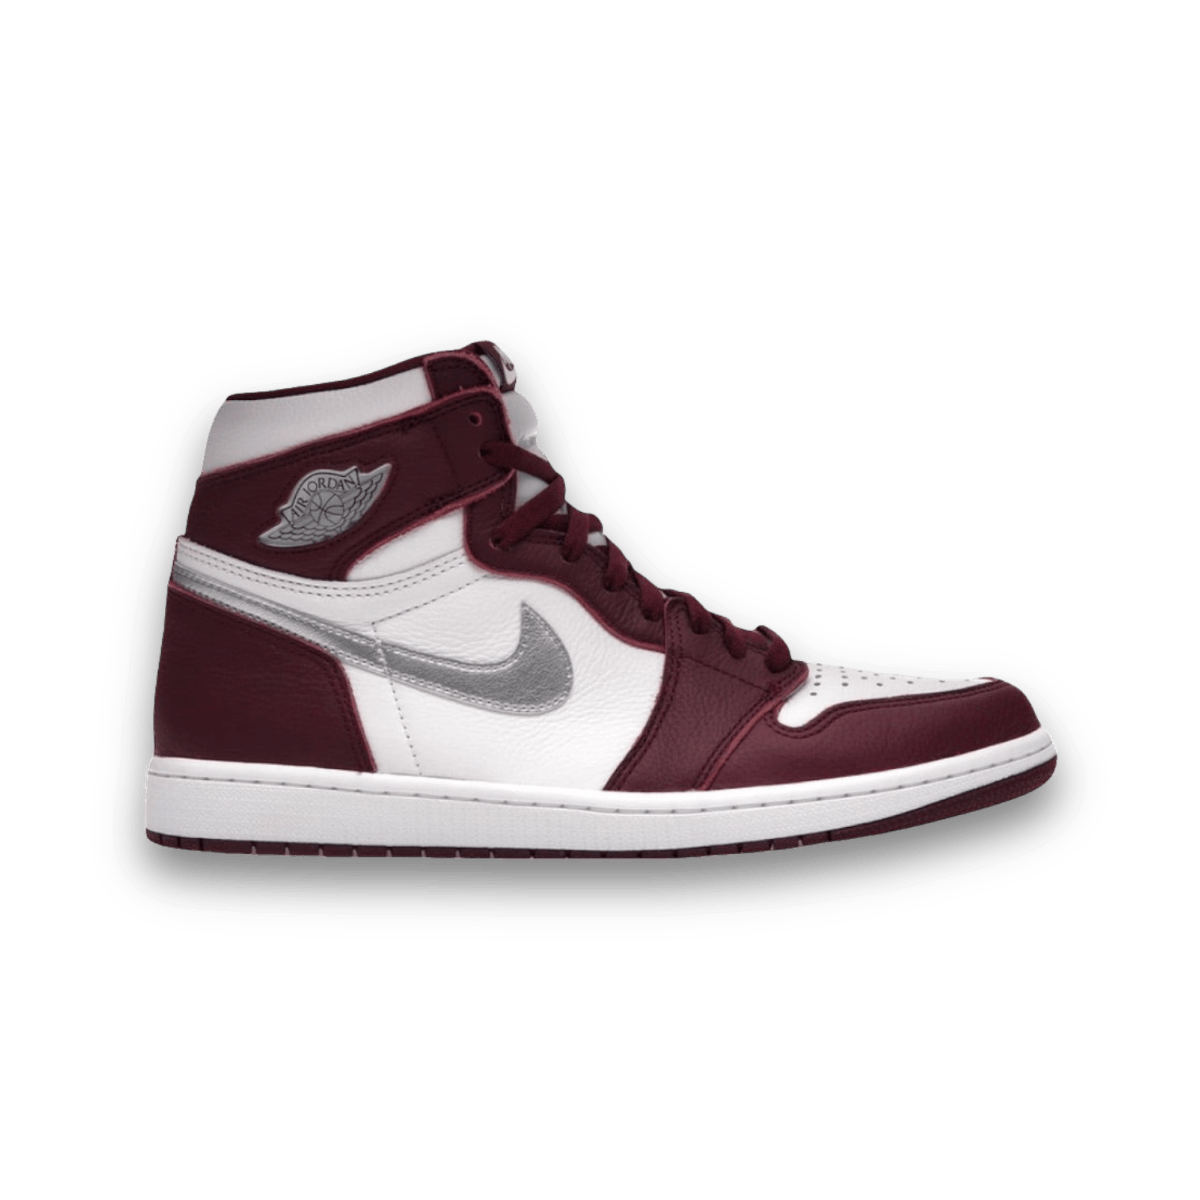 Jordan 1 Retro High OG Bordeaux - Grade School - sneaker - High Sneaker - Jordan - Jawns on Fire